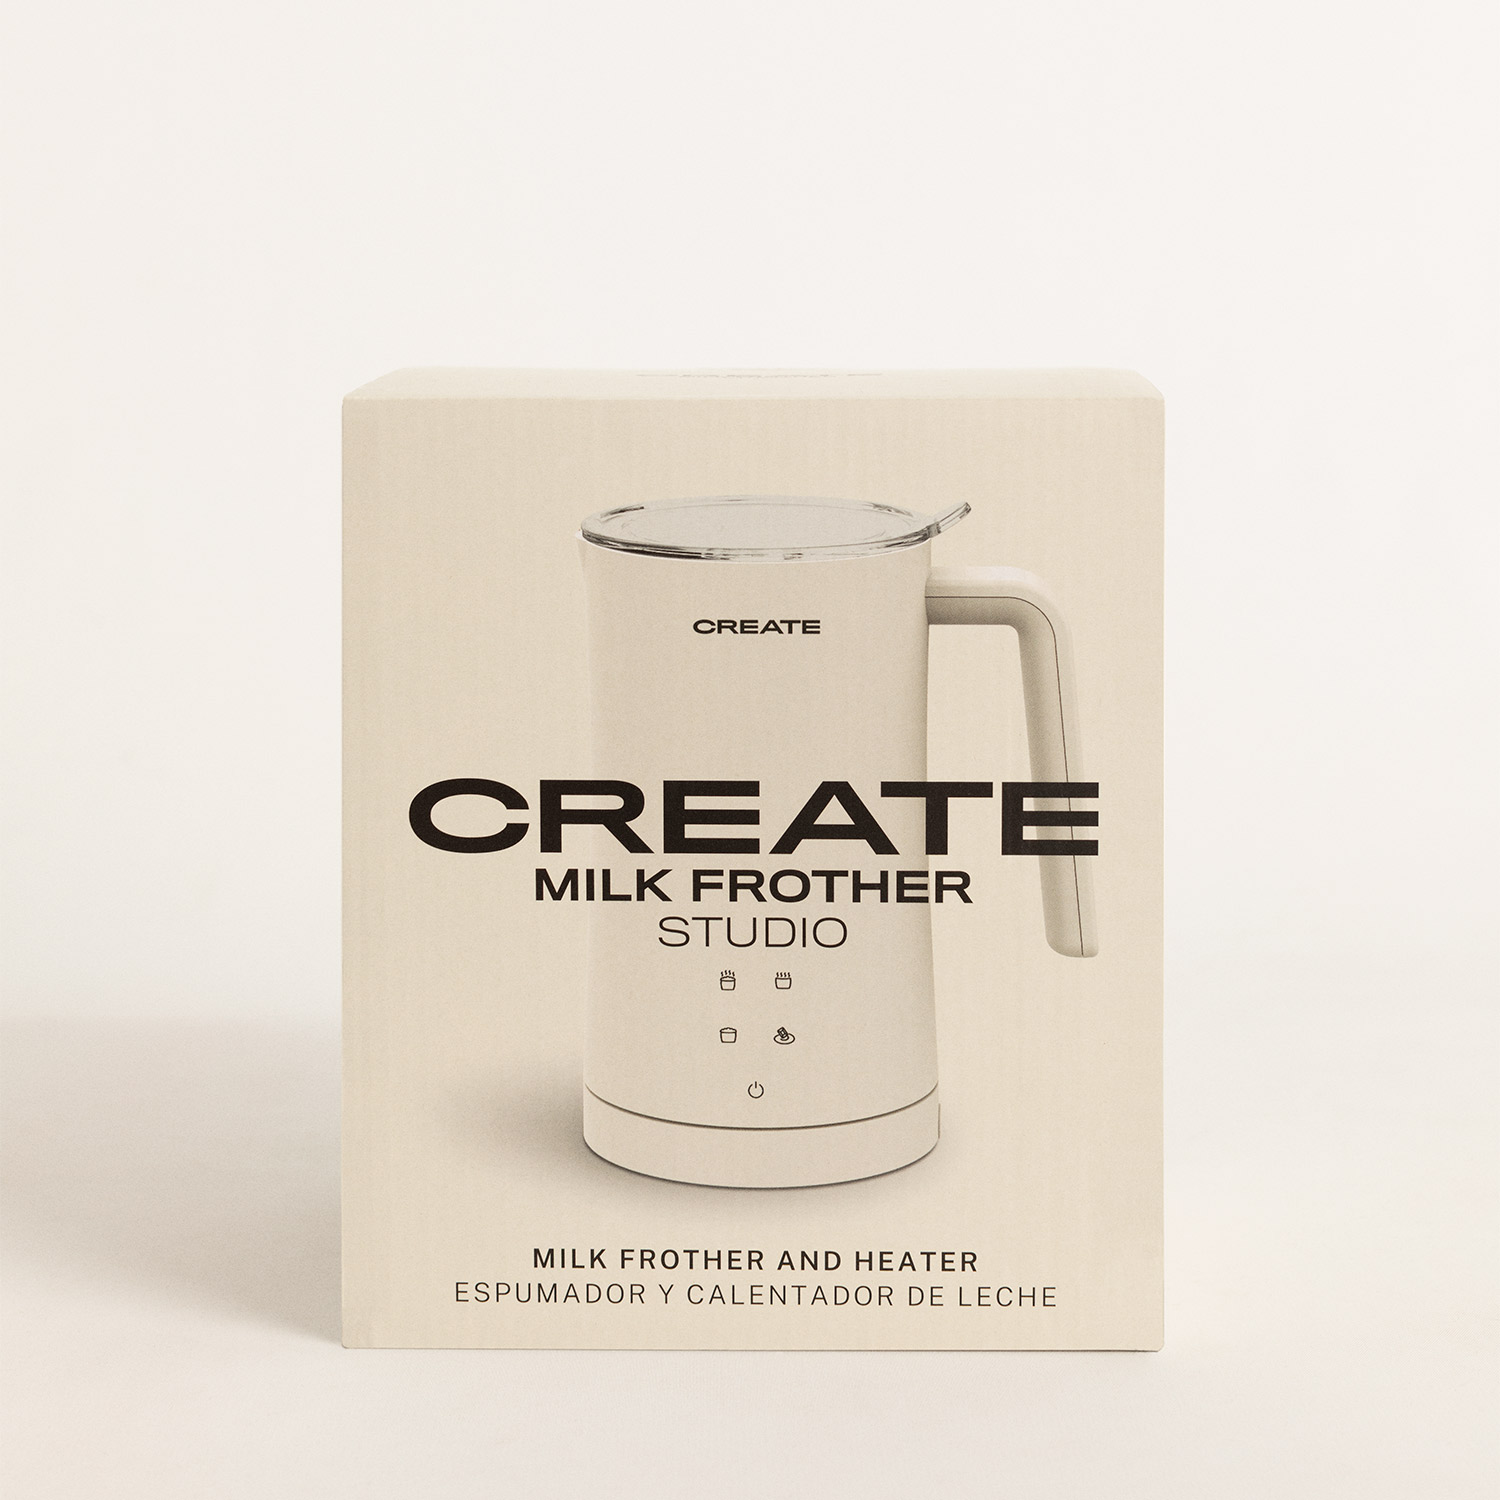 CREATE - MILK FROTHER STUDIO - Espumador calentador de leche - 4 funciones,  580ml, recogecables